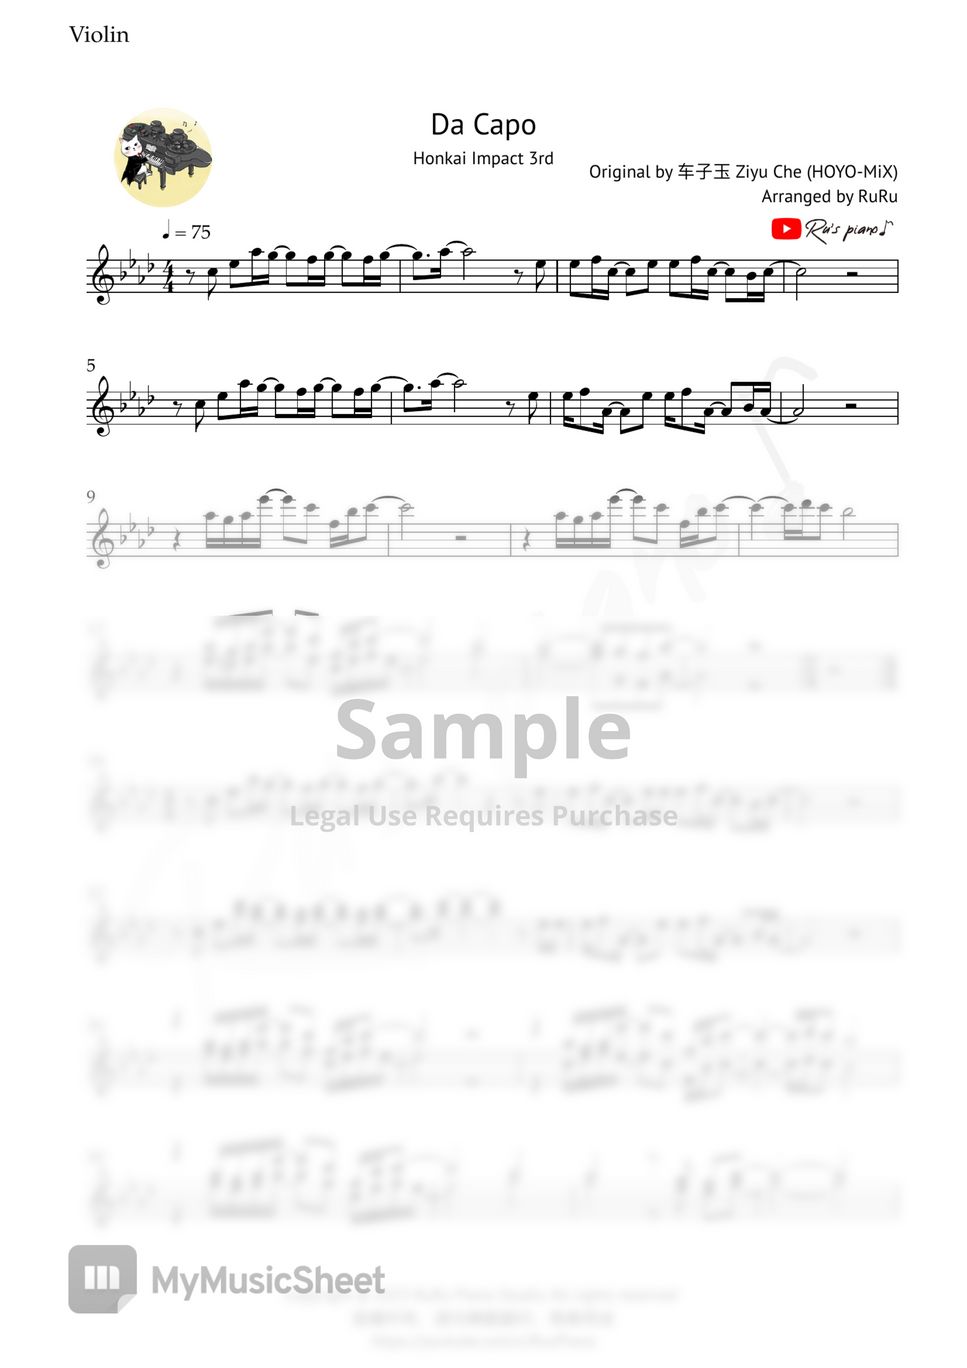 Honkai Impact 3rd: Graduation Trip Theme Song - Da Capo (Piano & Violine ver.) by Ru's Piano